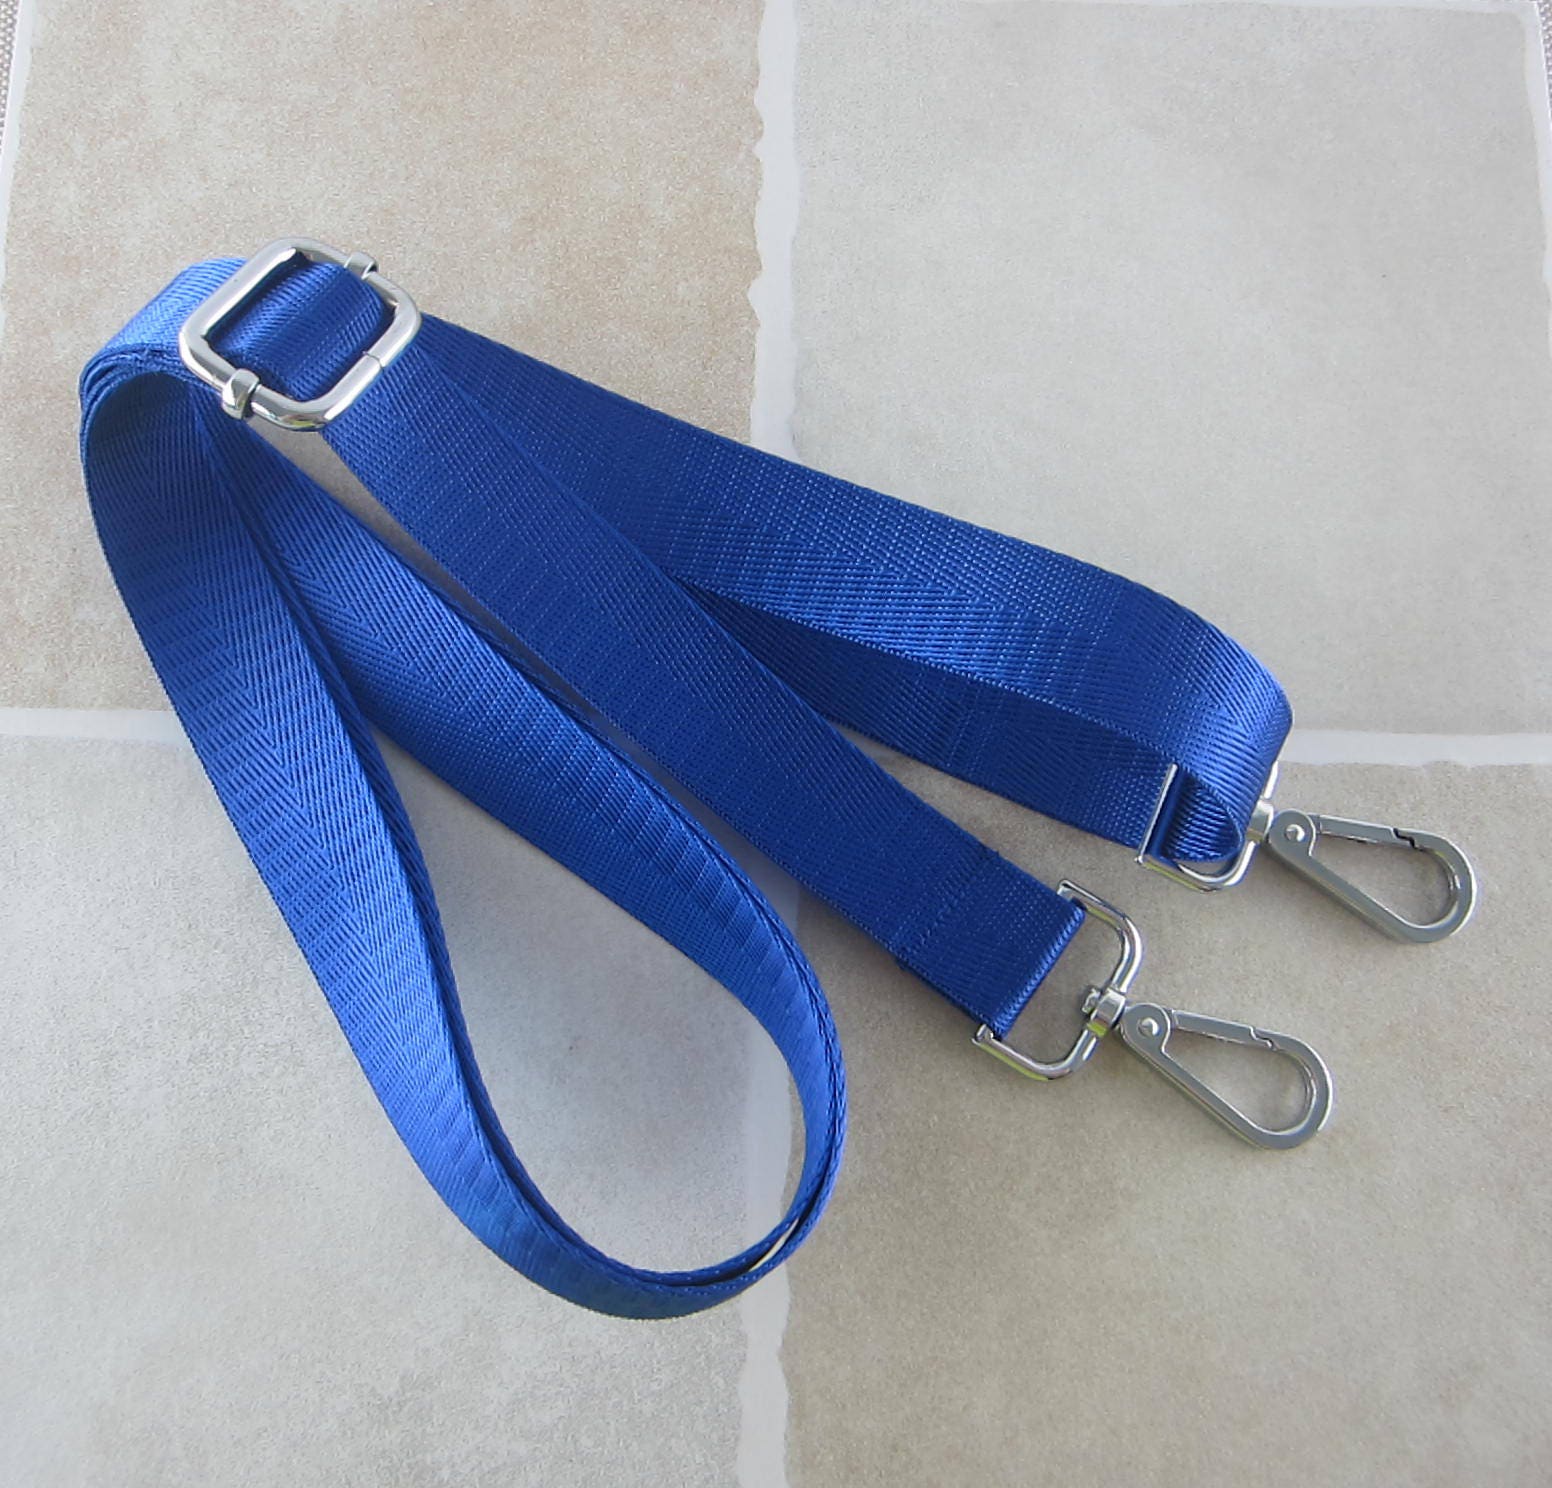 Blue Nylon Strap for Bag 2.5cm Wide Cross Body Strap